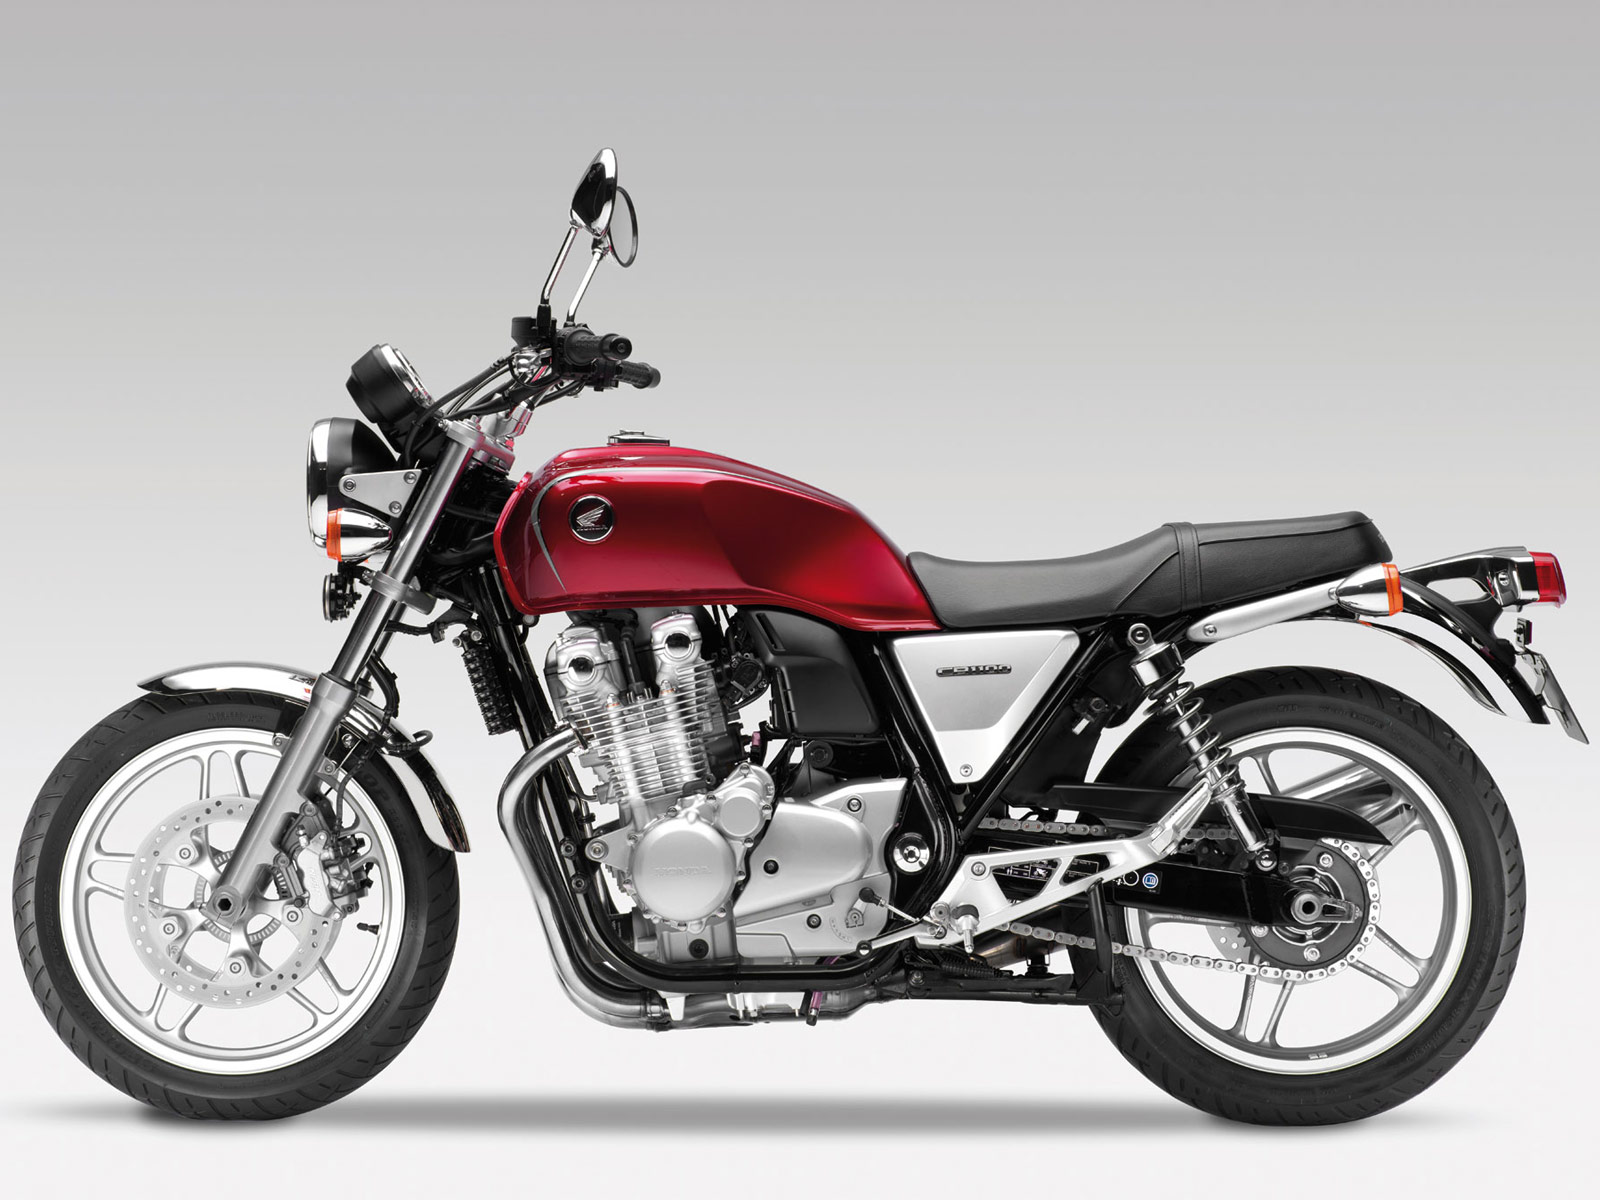 2013 Honda CB1100 Motorcycle Insurance Information Specifications